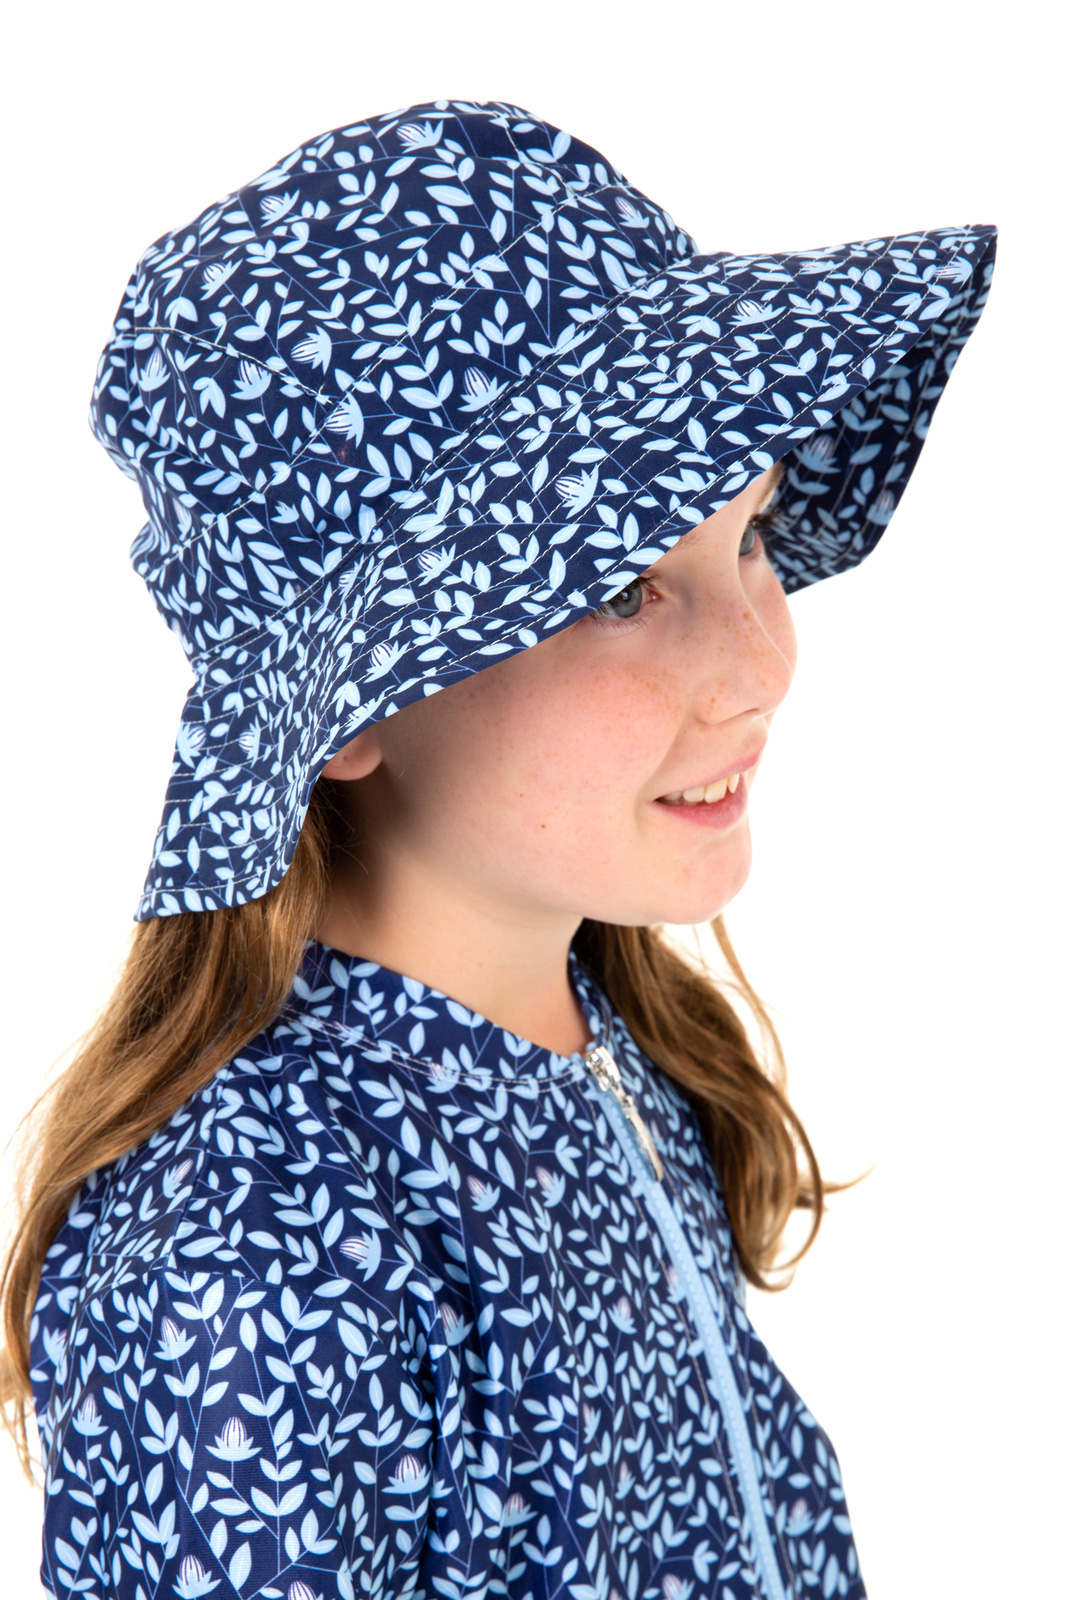 Blueberry Swim Hat (XS only)